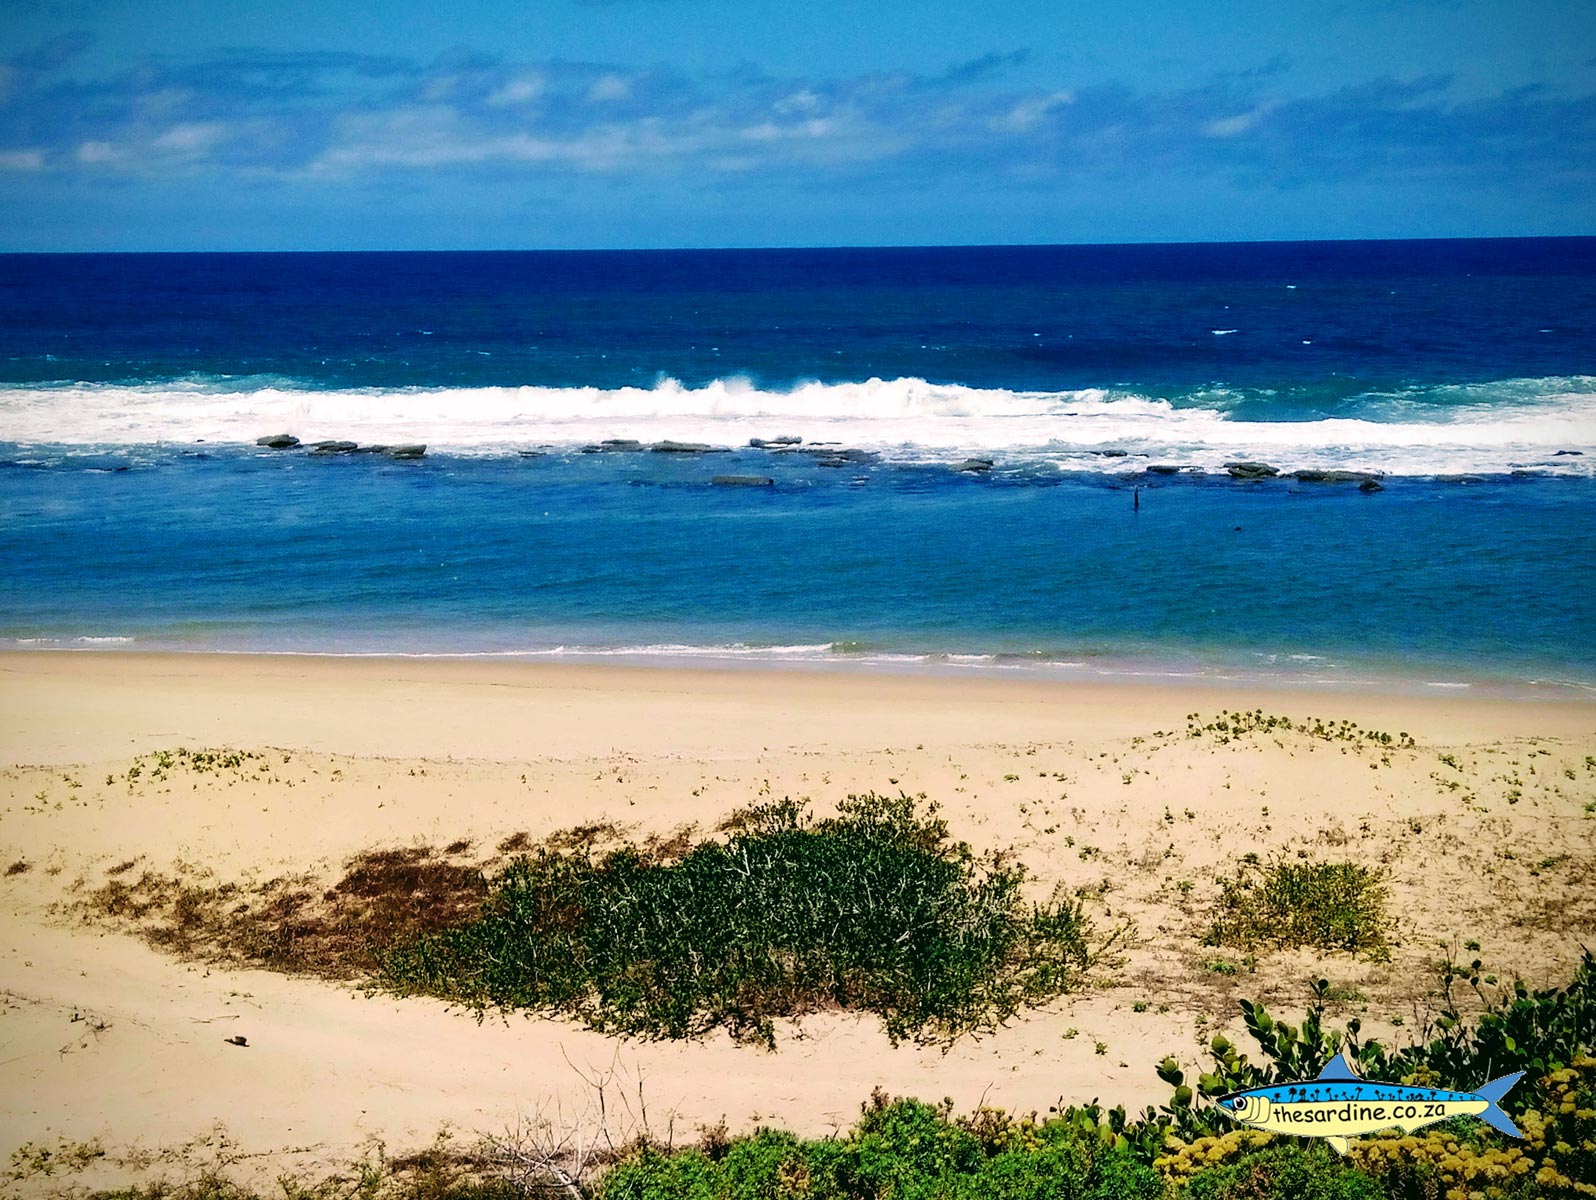 Praia do Chongoene to Xai Xai reveals views like this the whole way along